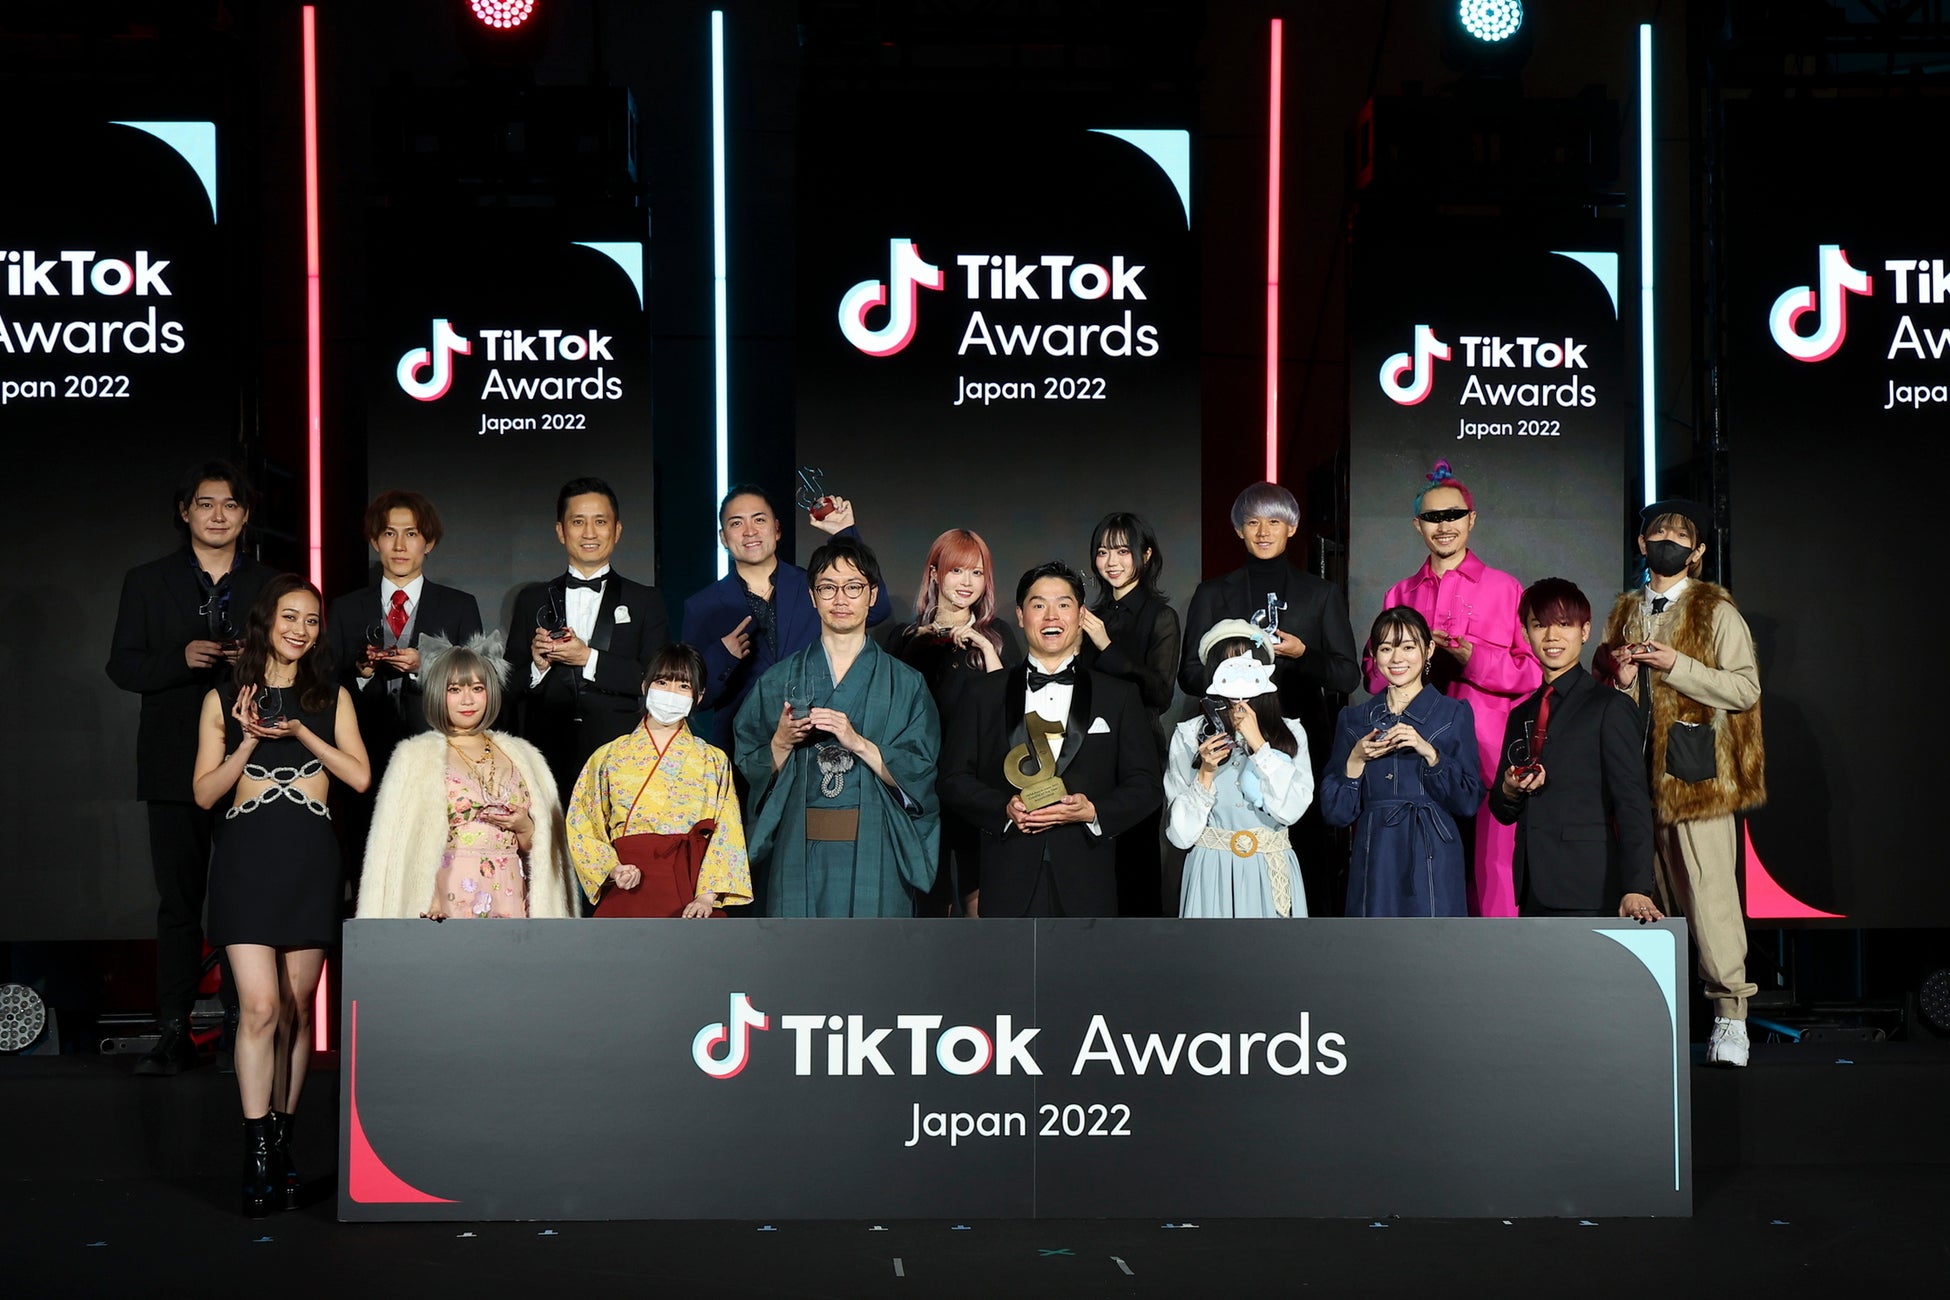 【TikTok Awards Japan 2022】Miyu、今年TikTokでスキルフルなダンスで人々を圧倒したクリエイターを表彰する「Dance Creator of the Year」を受賞のサブ画像3